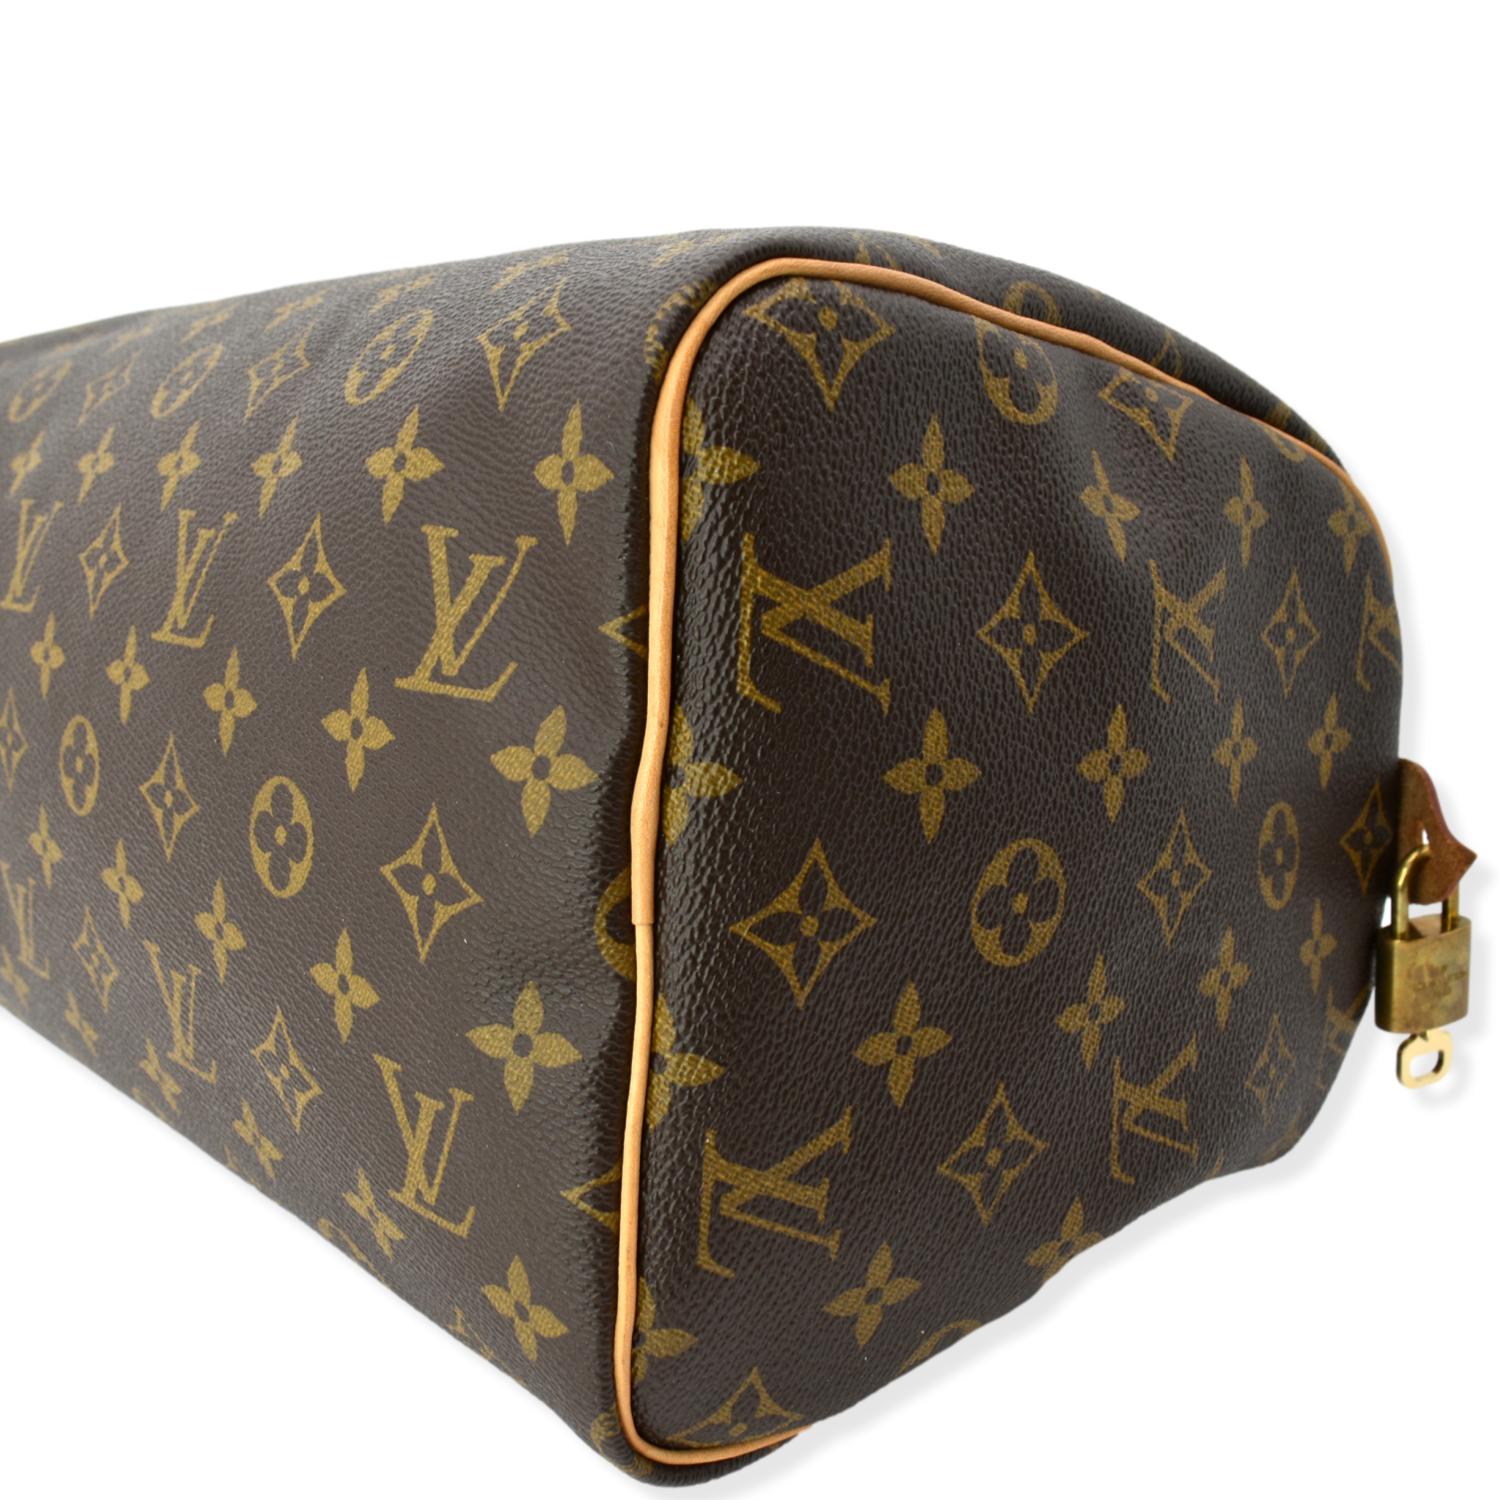 Speedy leather handbag Louis Vuitton Brown in Leather - 31594126